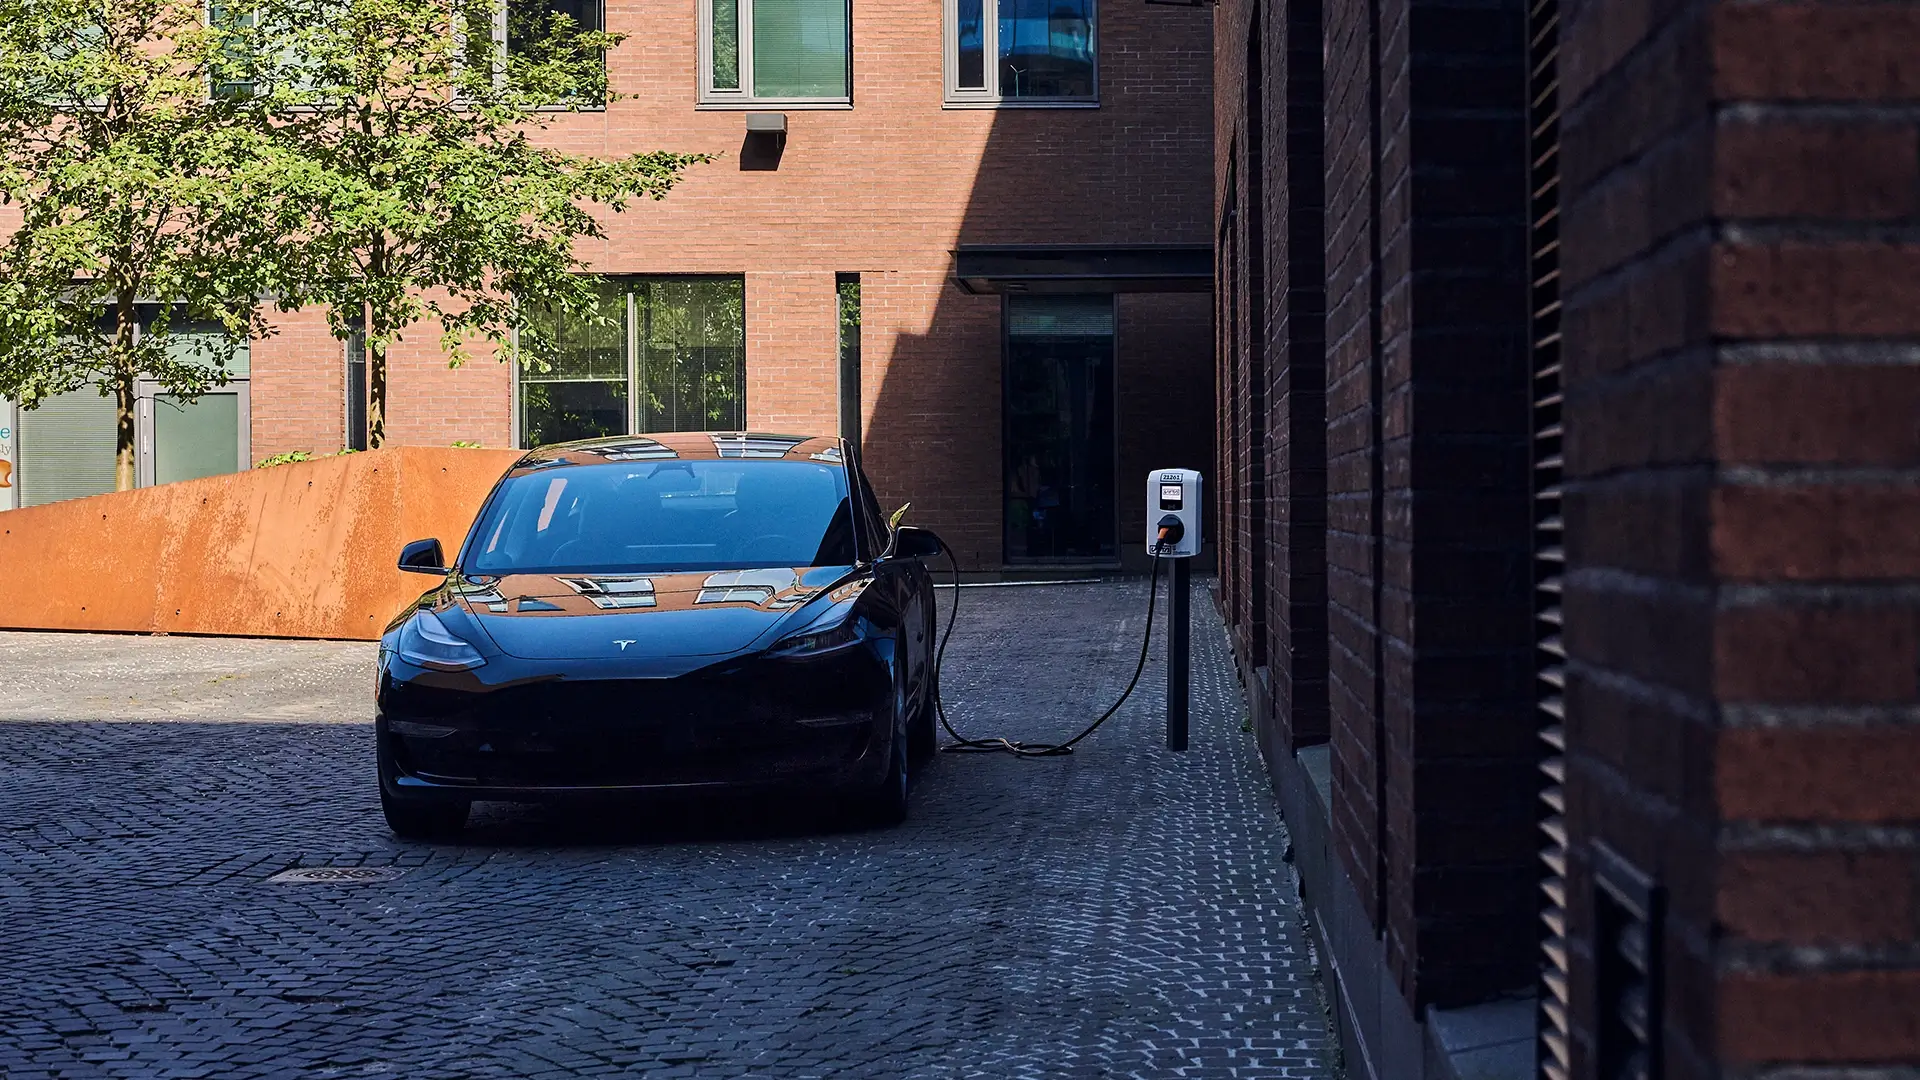 Urban electric vehicle charging brick wall